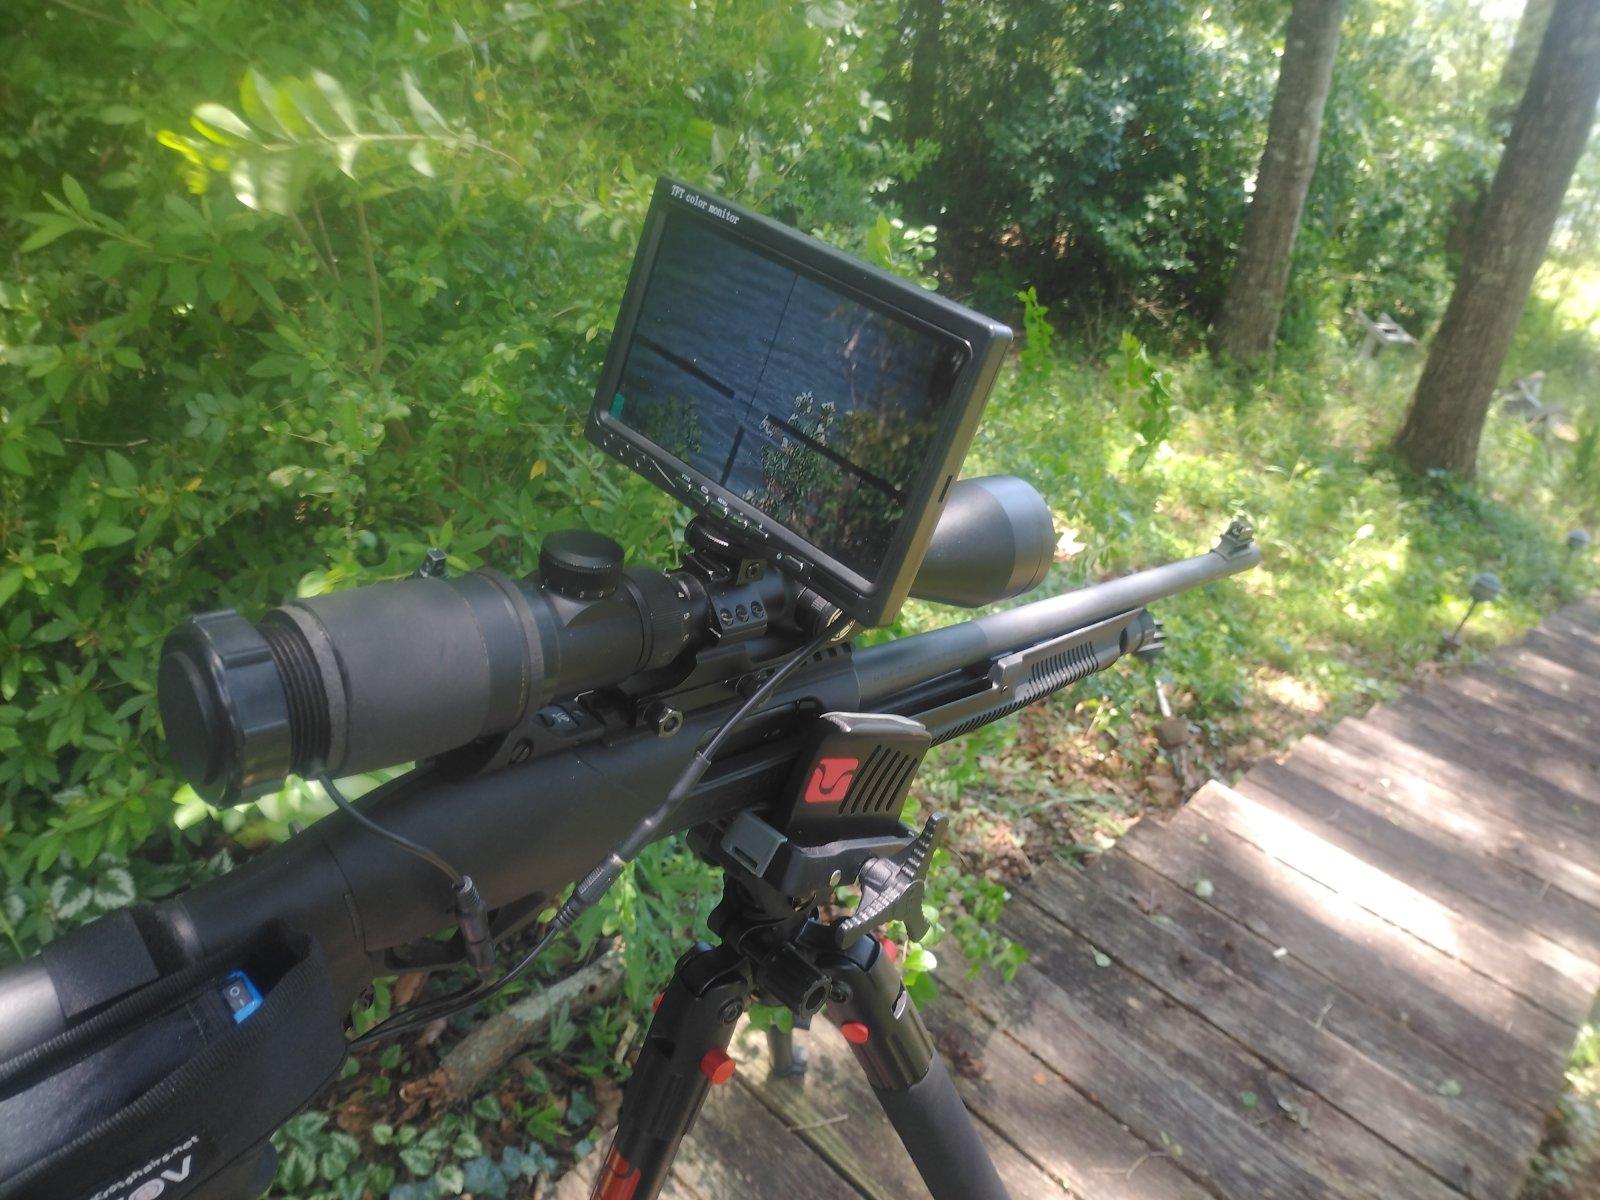 Digital Crosshairs adaptive rifle scope clip-on mounted on Bernelli shotgun